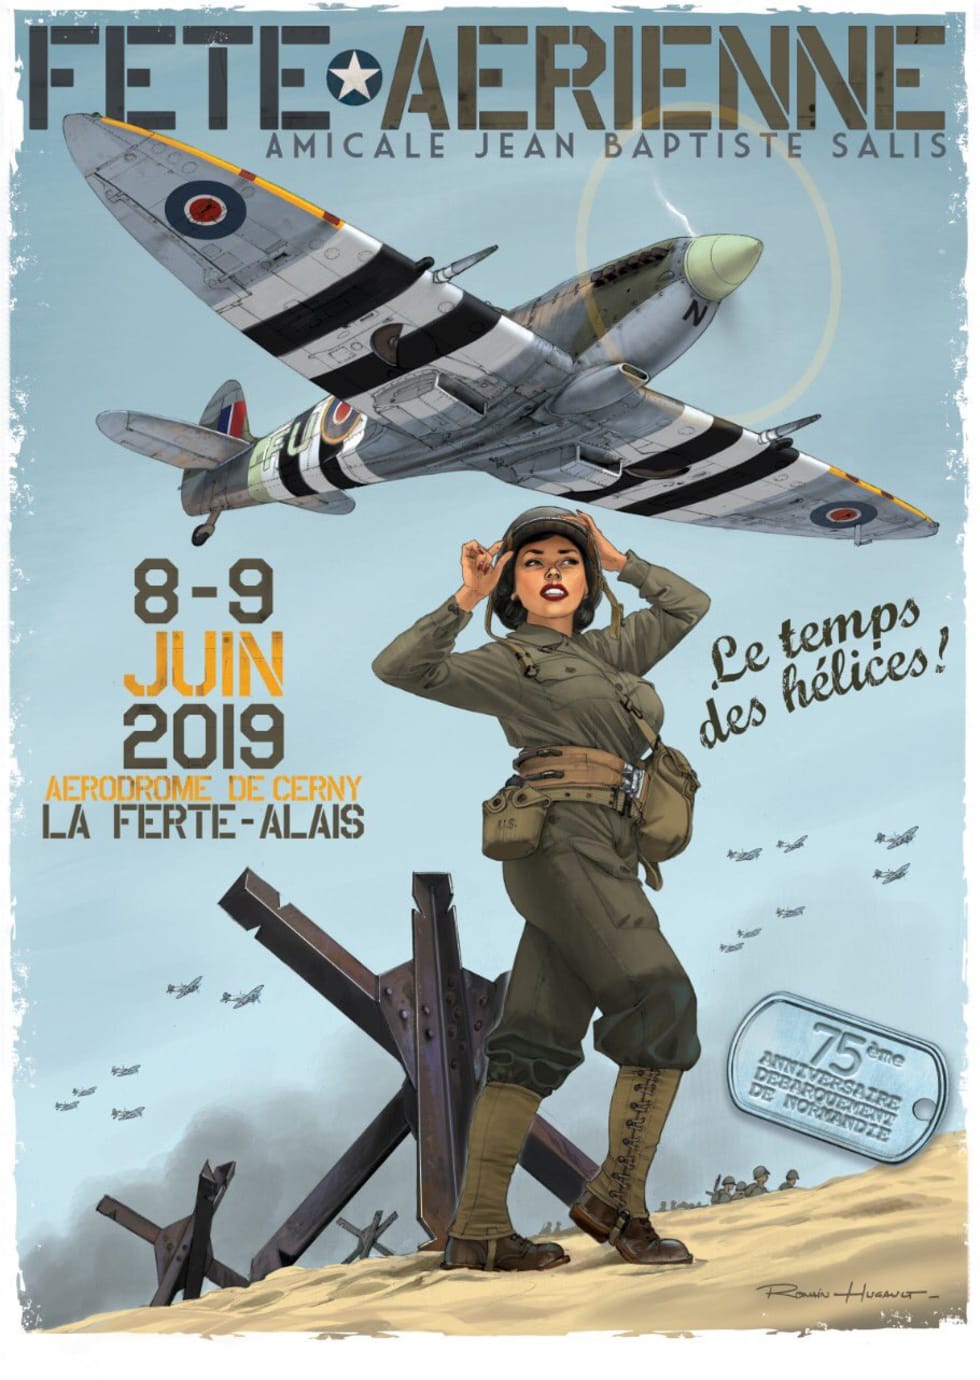 2019 poster for the Ferté-Alais Air Show